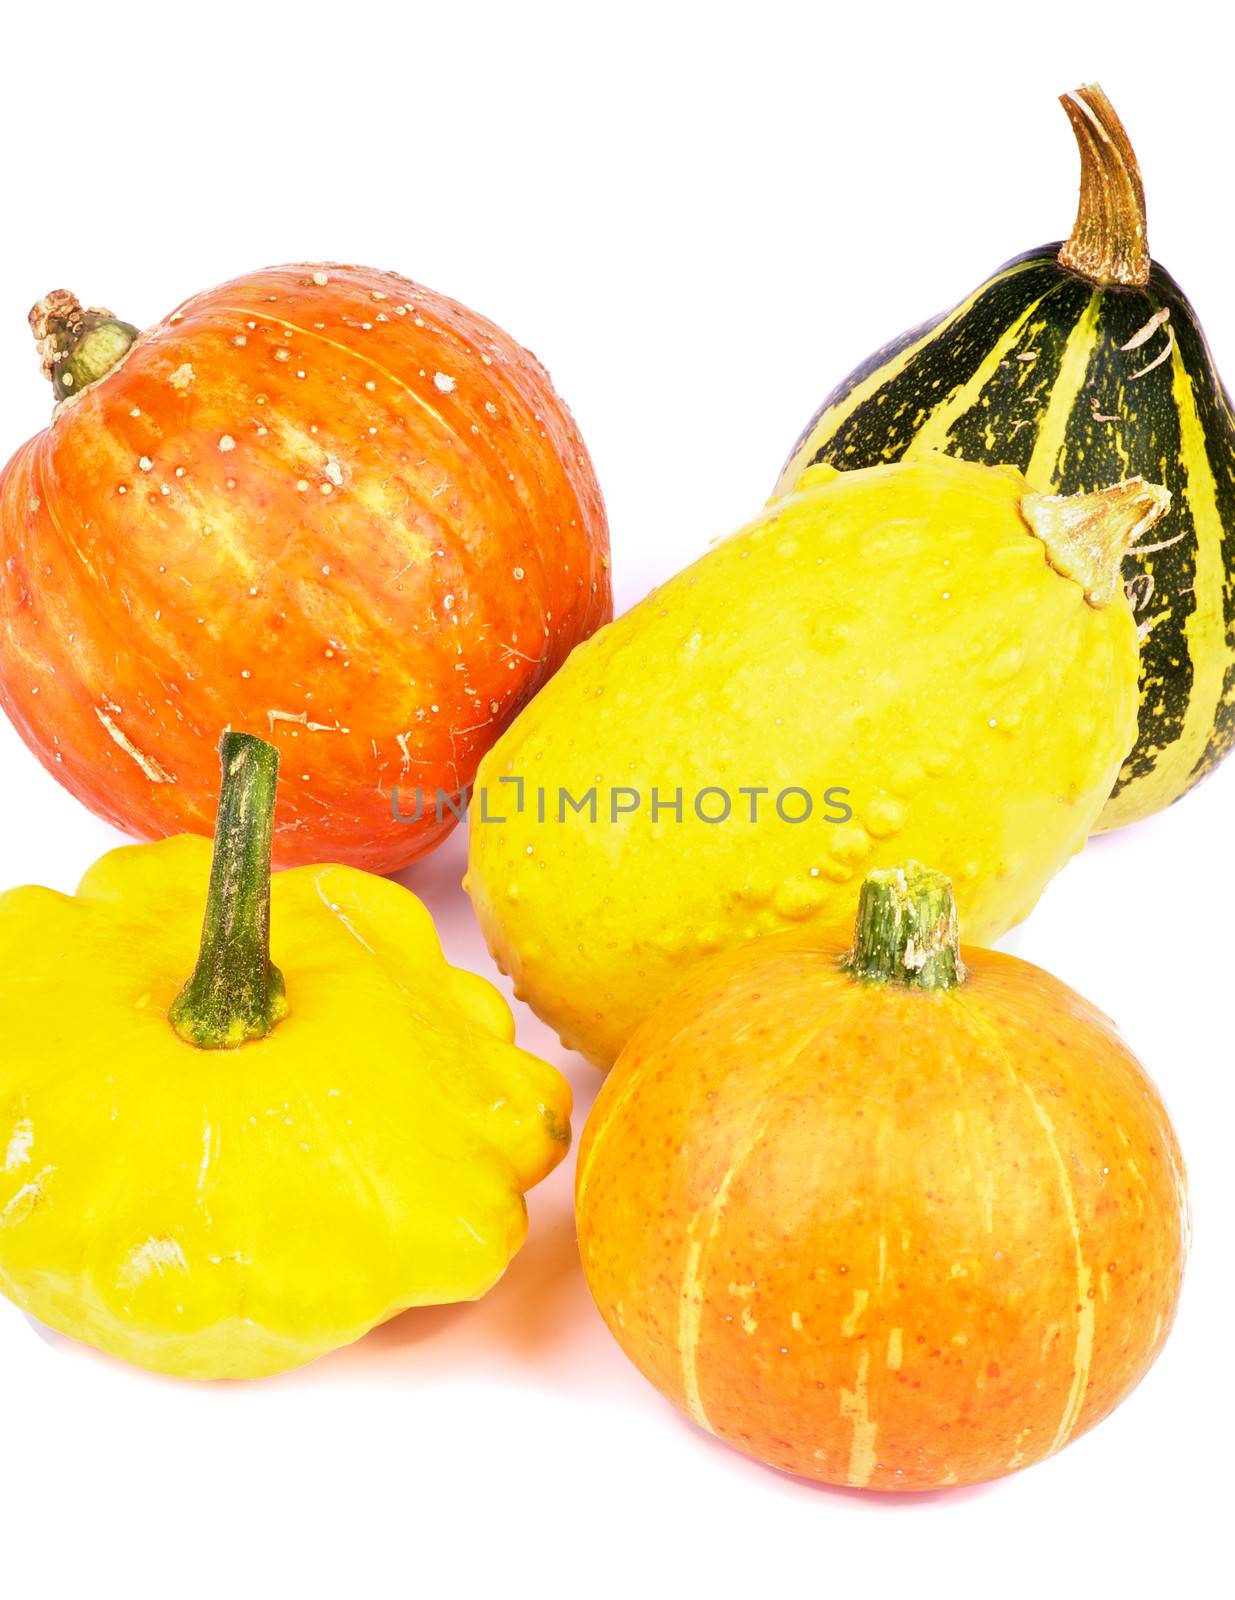 Squash and Pumpkins by zhekos